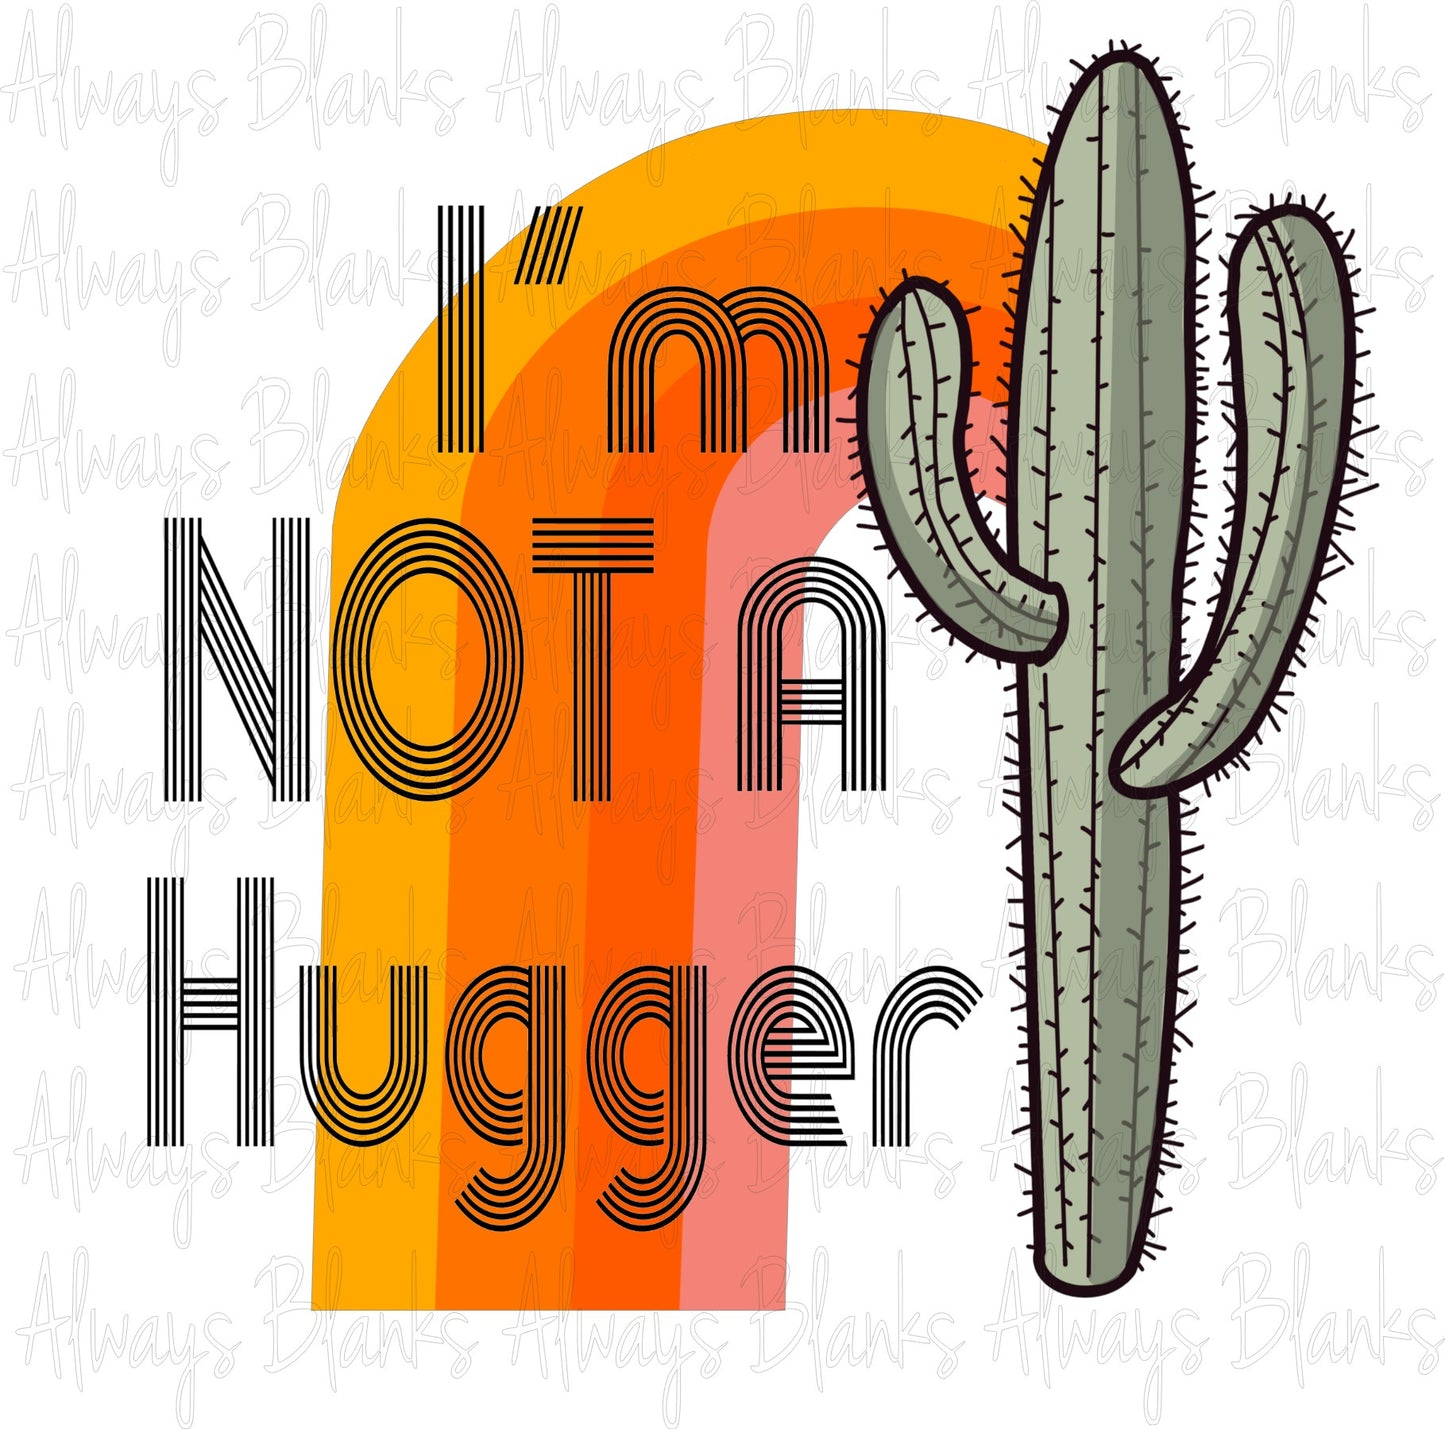 Cactus (I'm not a hugger)